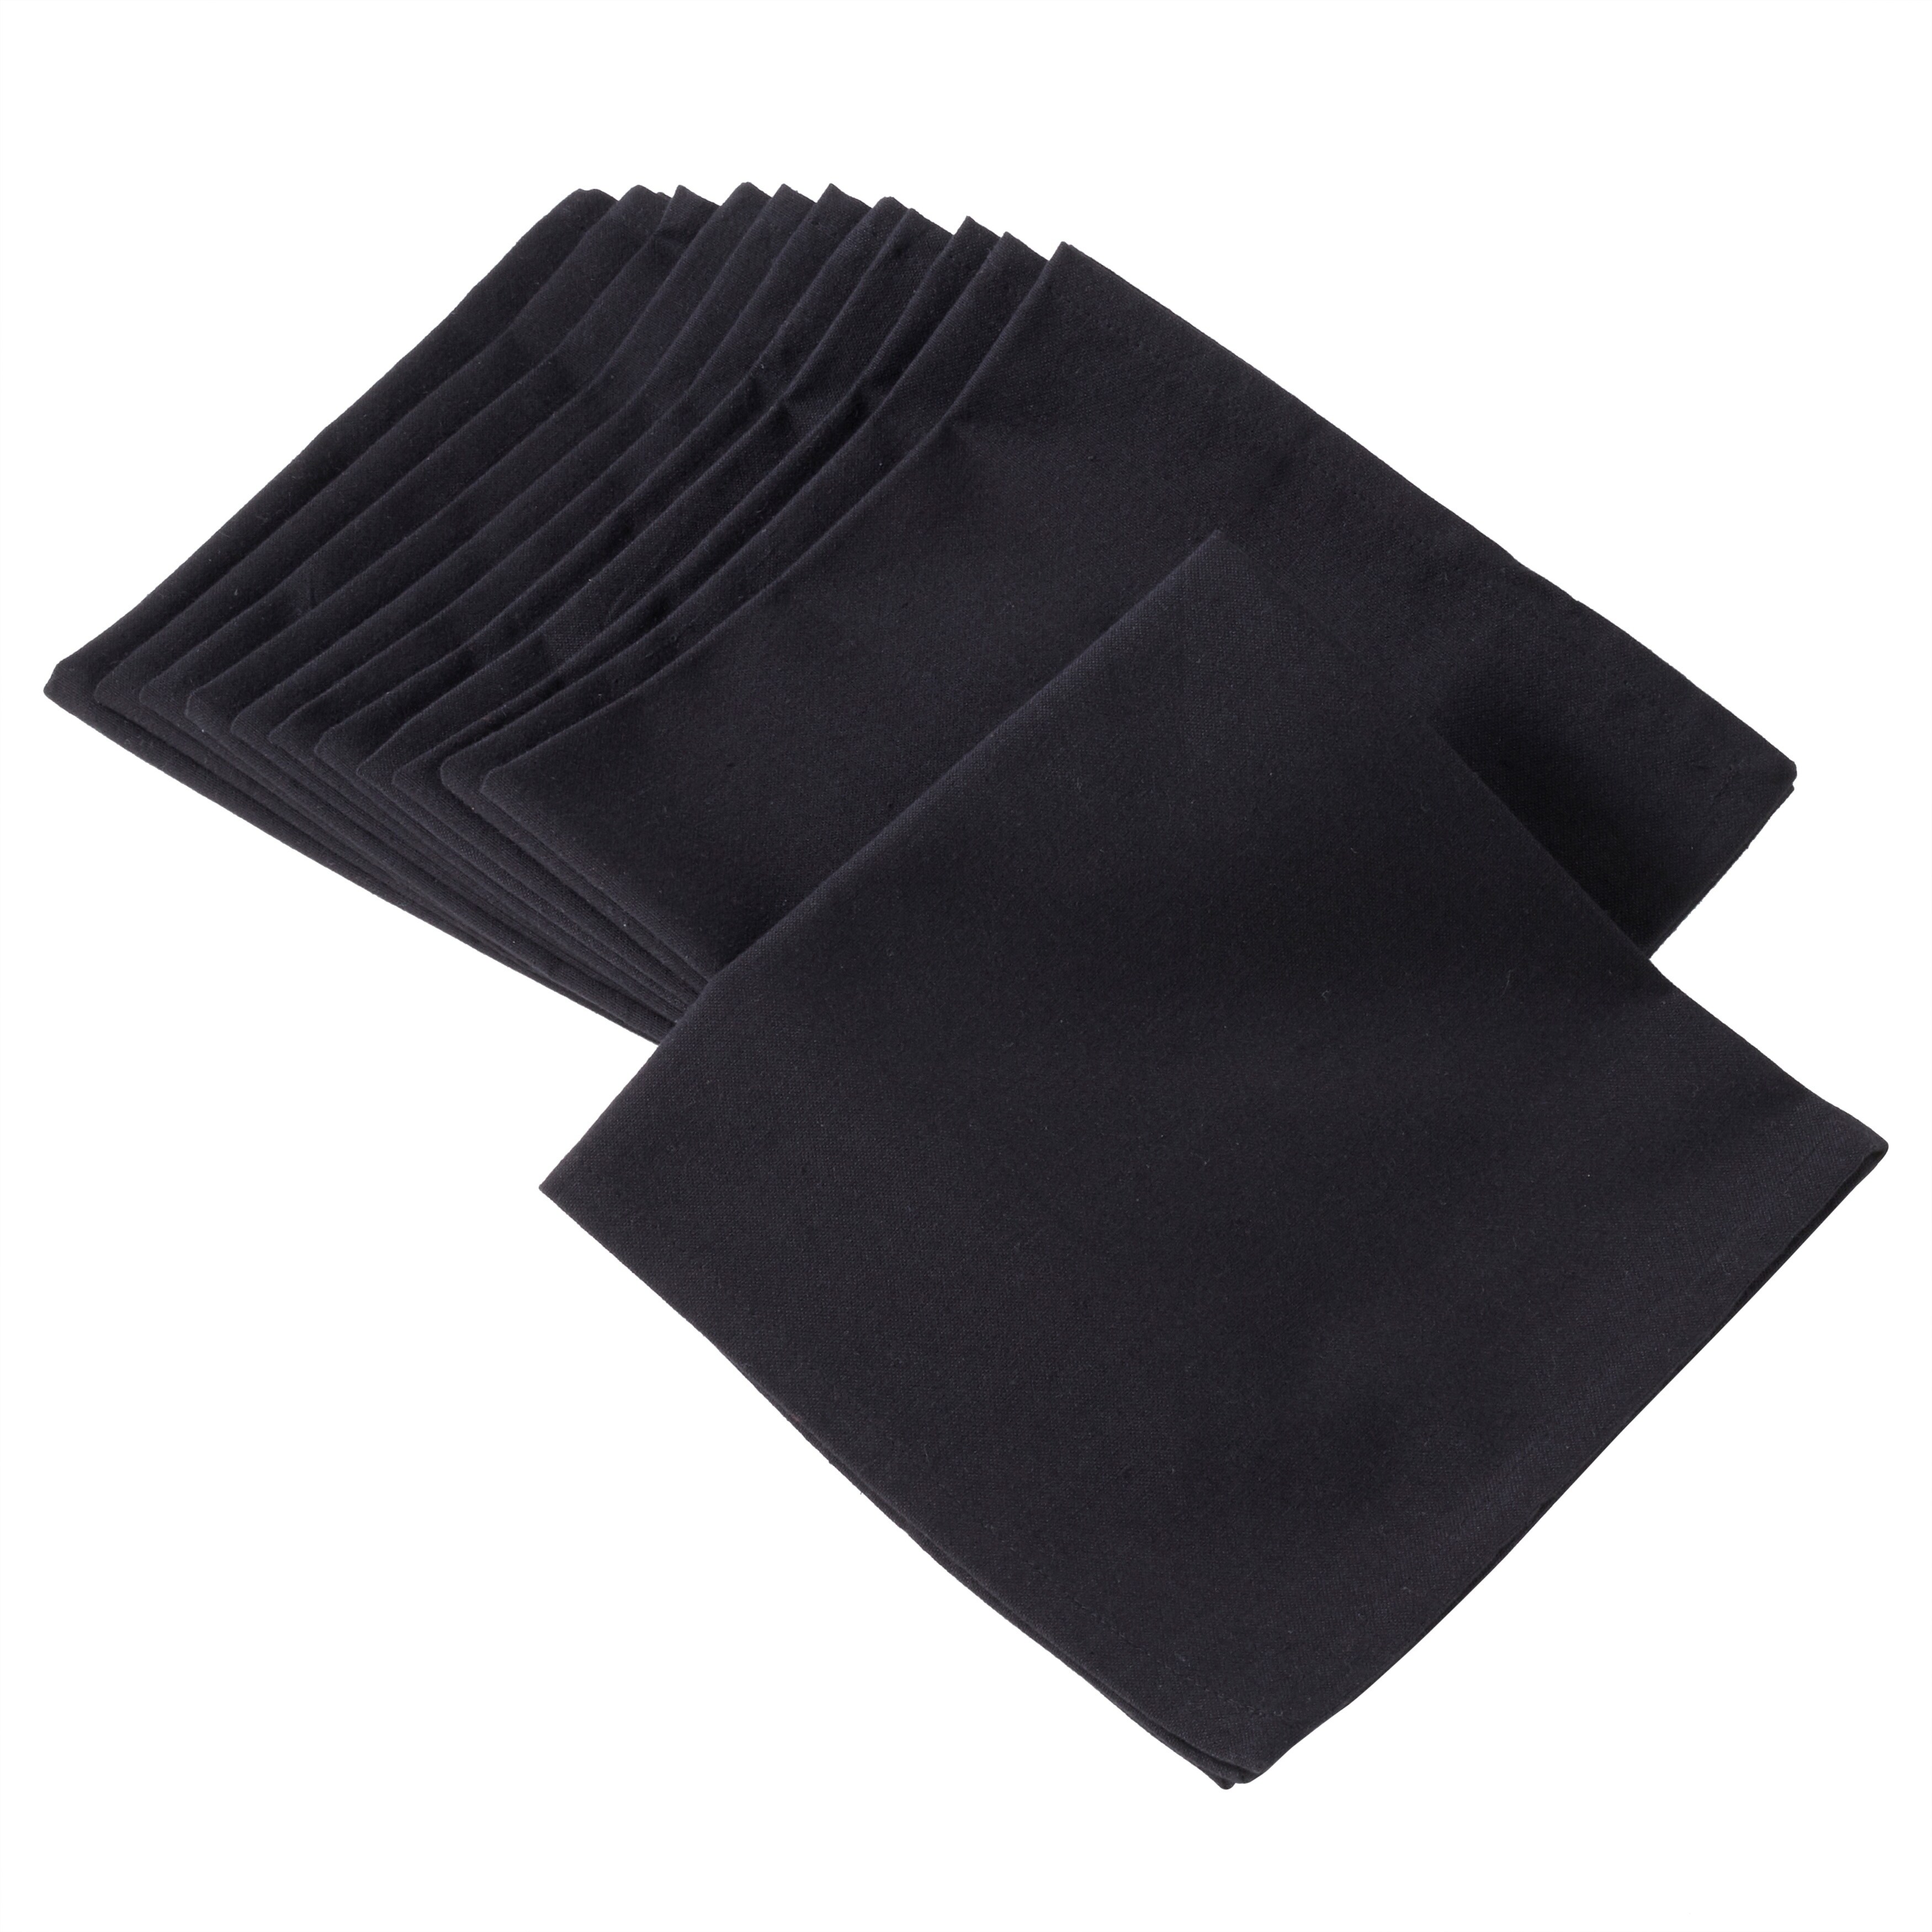 Solid Black Cloth Napkins, Set Of 6, Black Cotton Napkins